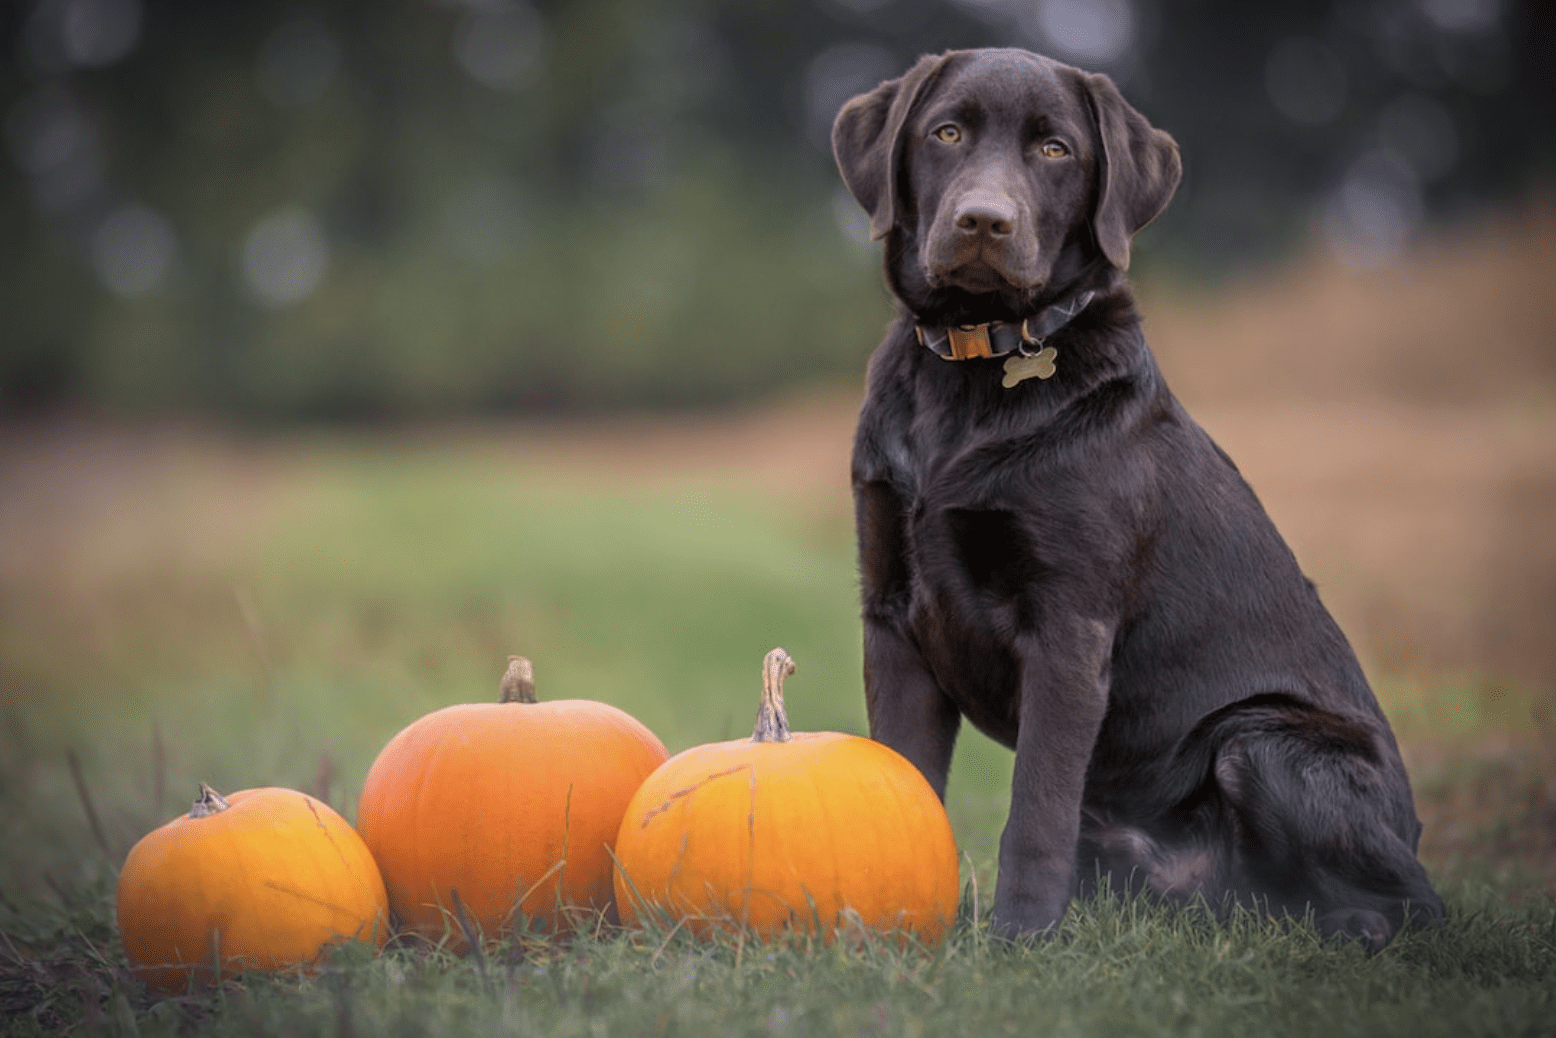 pumpkin for dogs